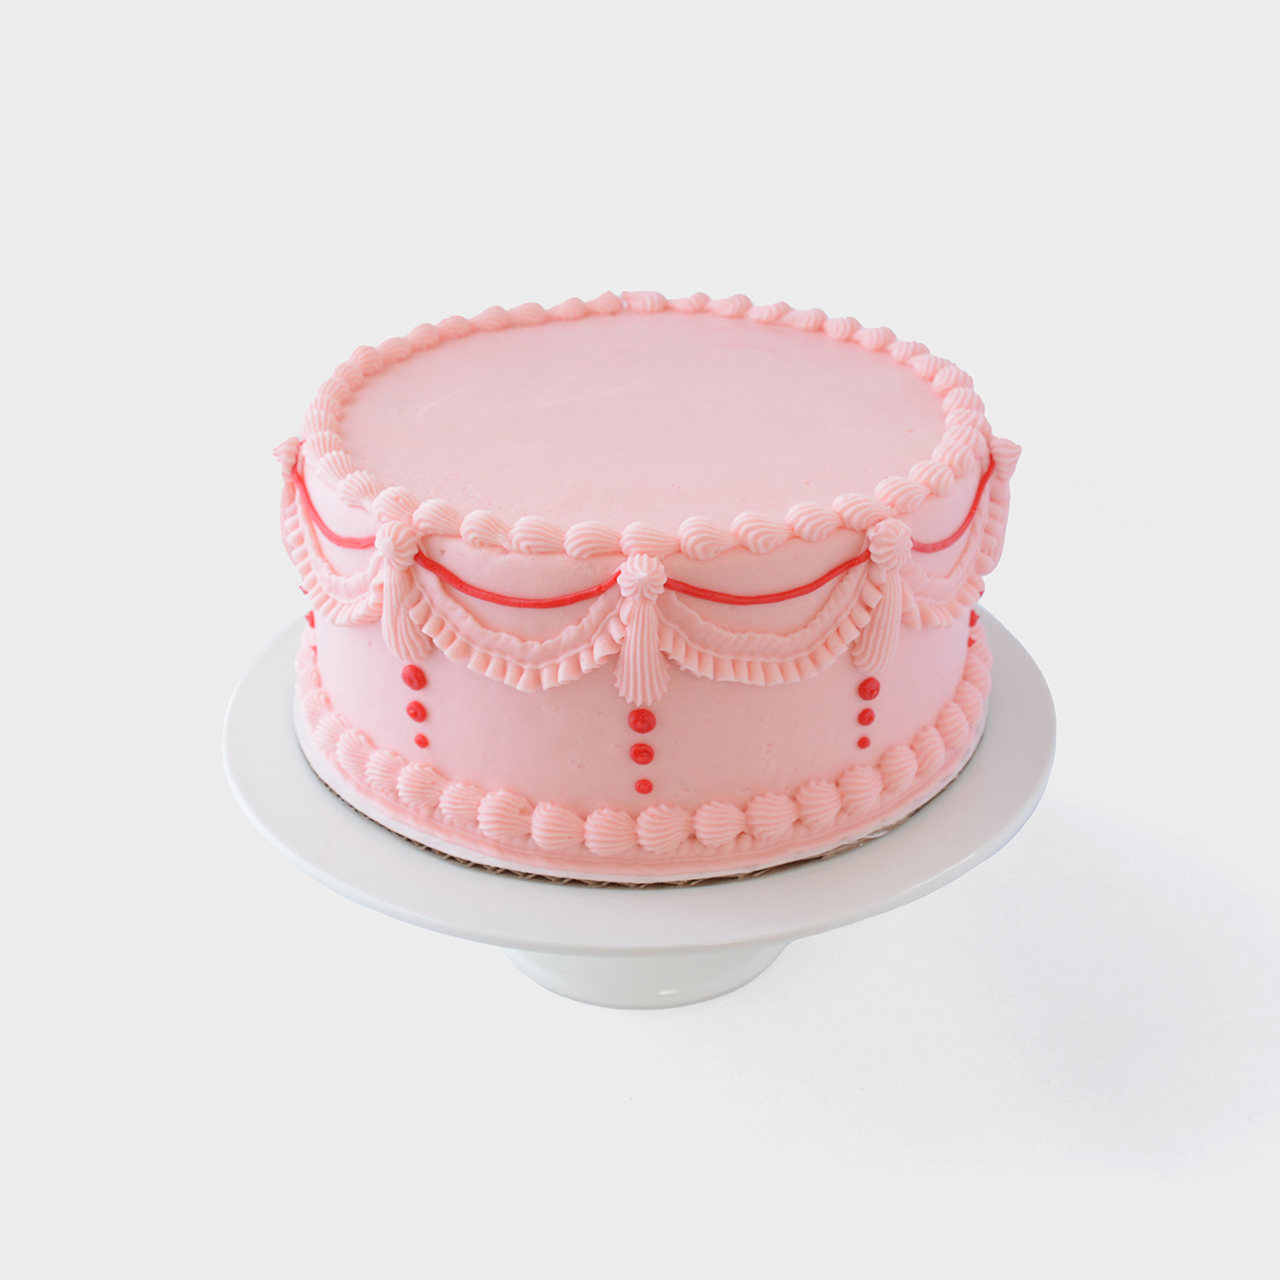 Pink vintage cake 